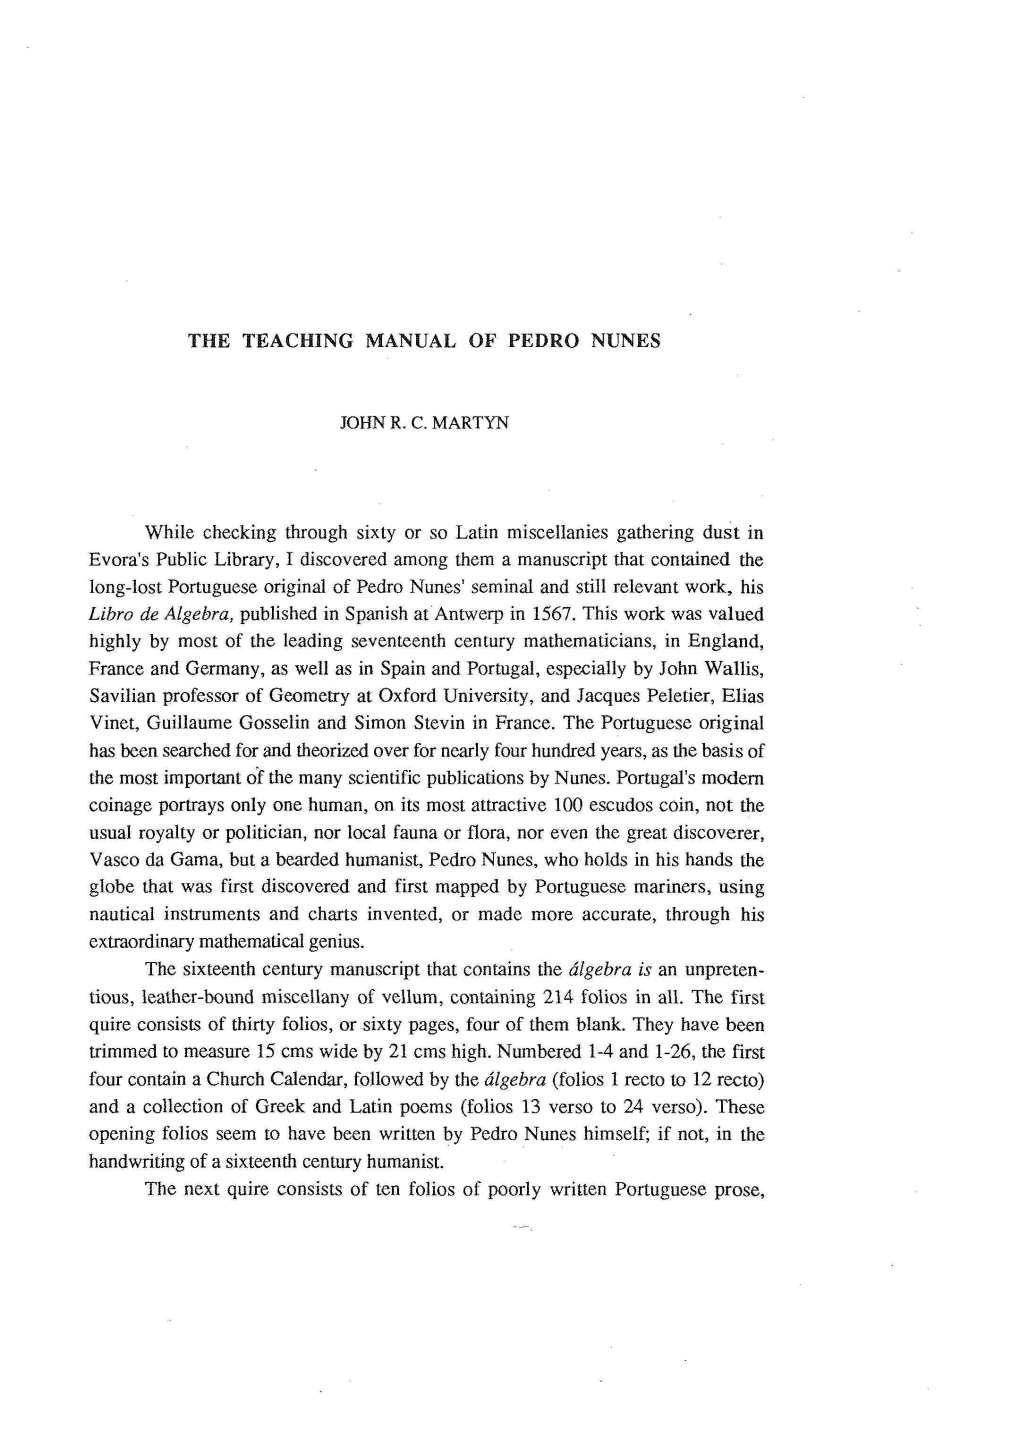 The Teaching Manual of Pedro Nunes John R. C. Martyn